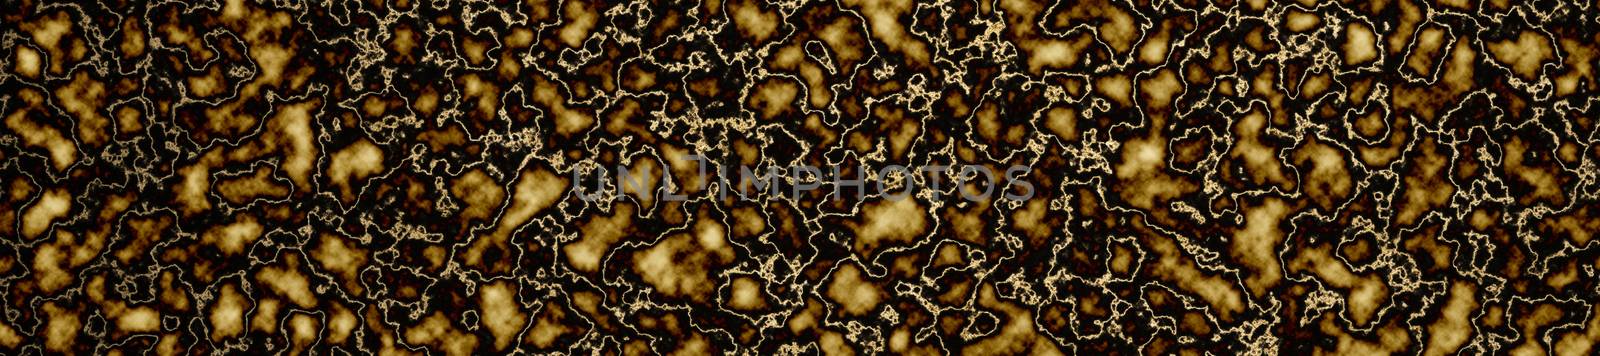 panorama abstract line art marble pattern texture luxury interio by Darkfox